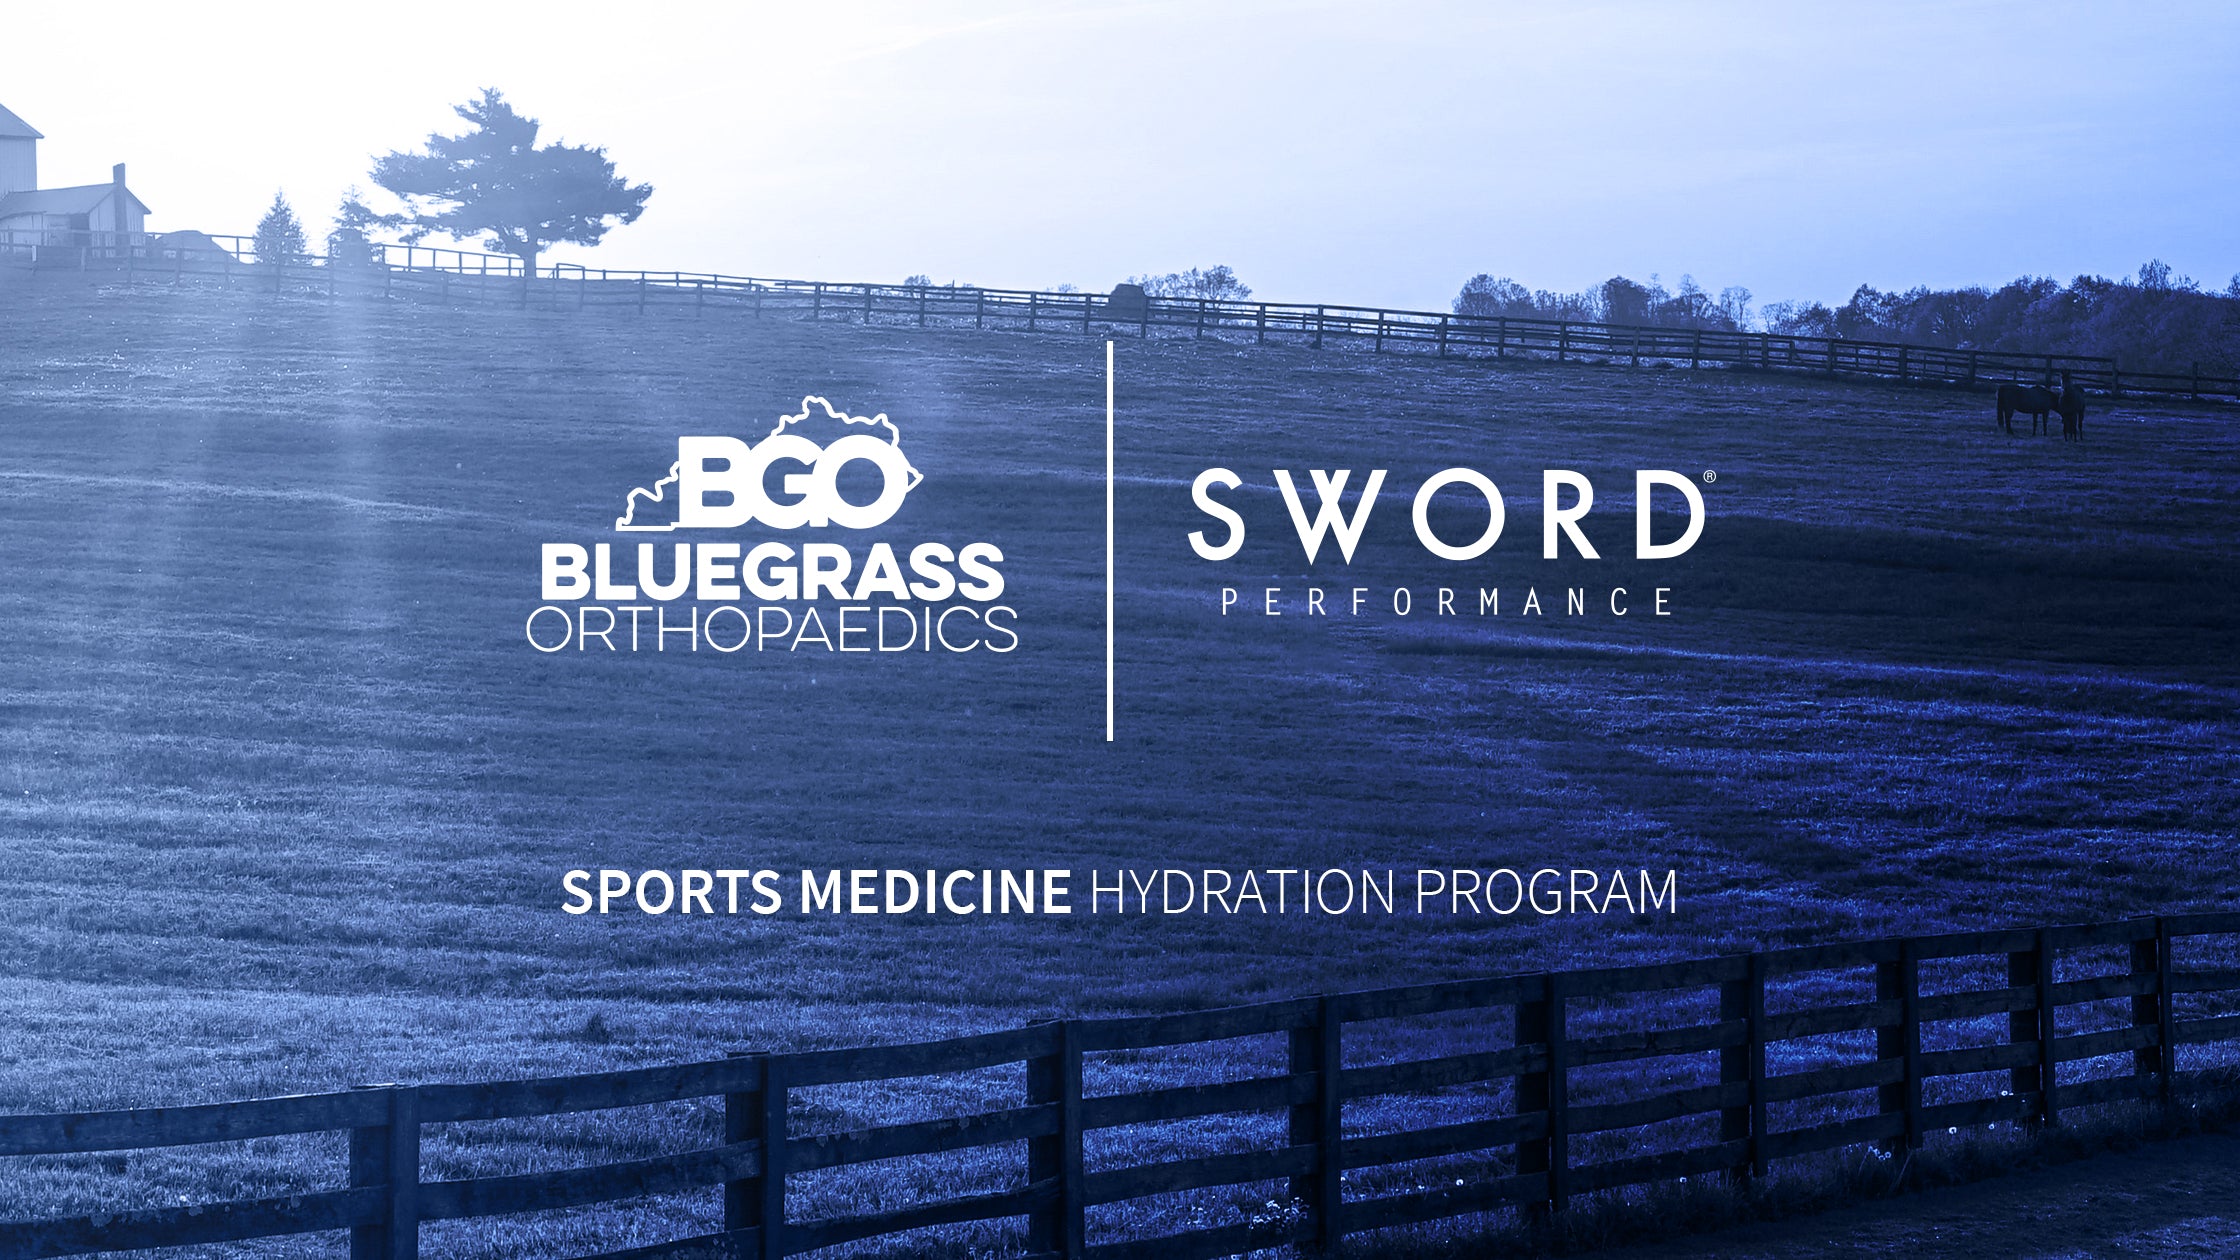 Sword Performance Partners with Bluegrass Orthopaedics